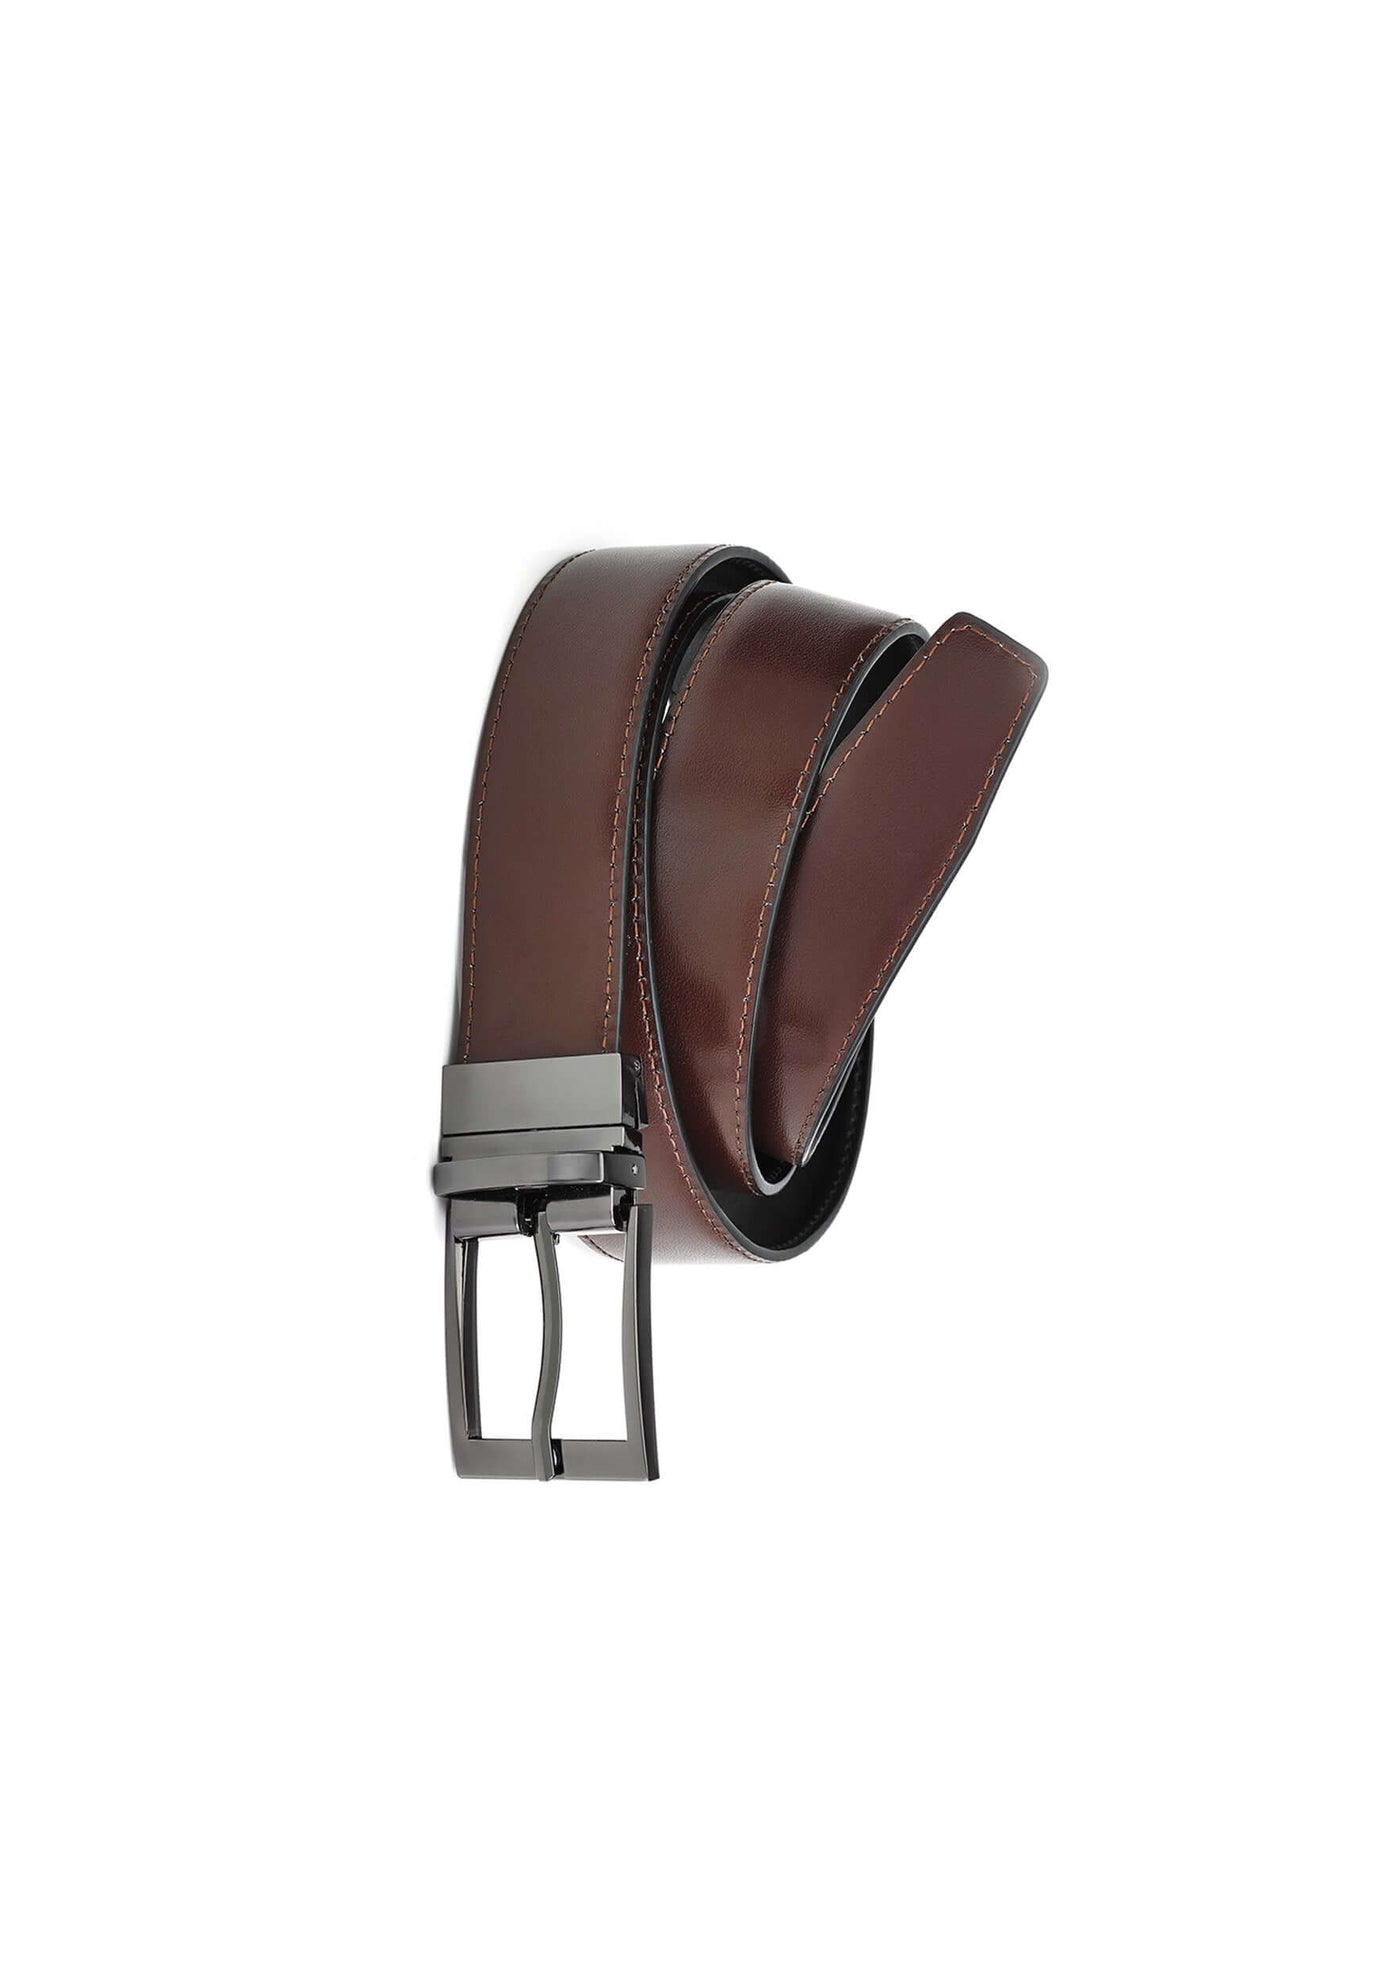 Biz Corporates Leather Reversible Belt - Mens